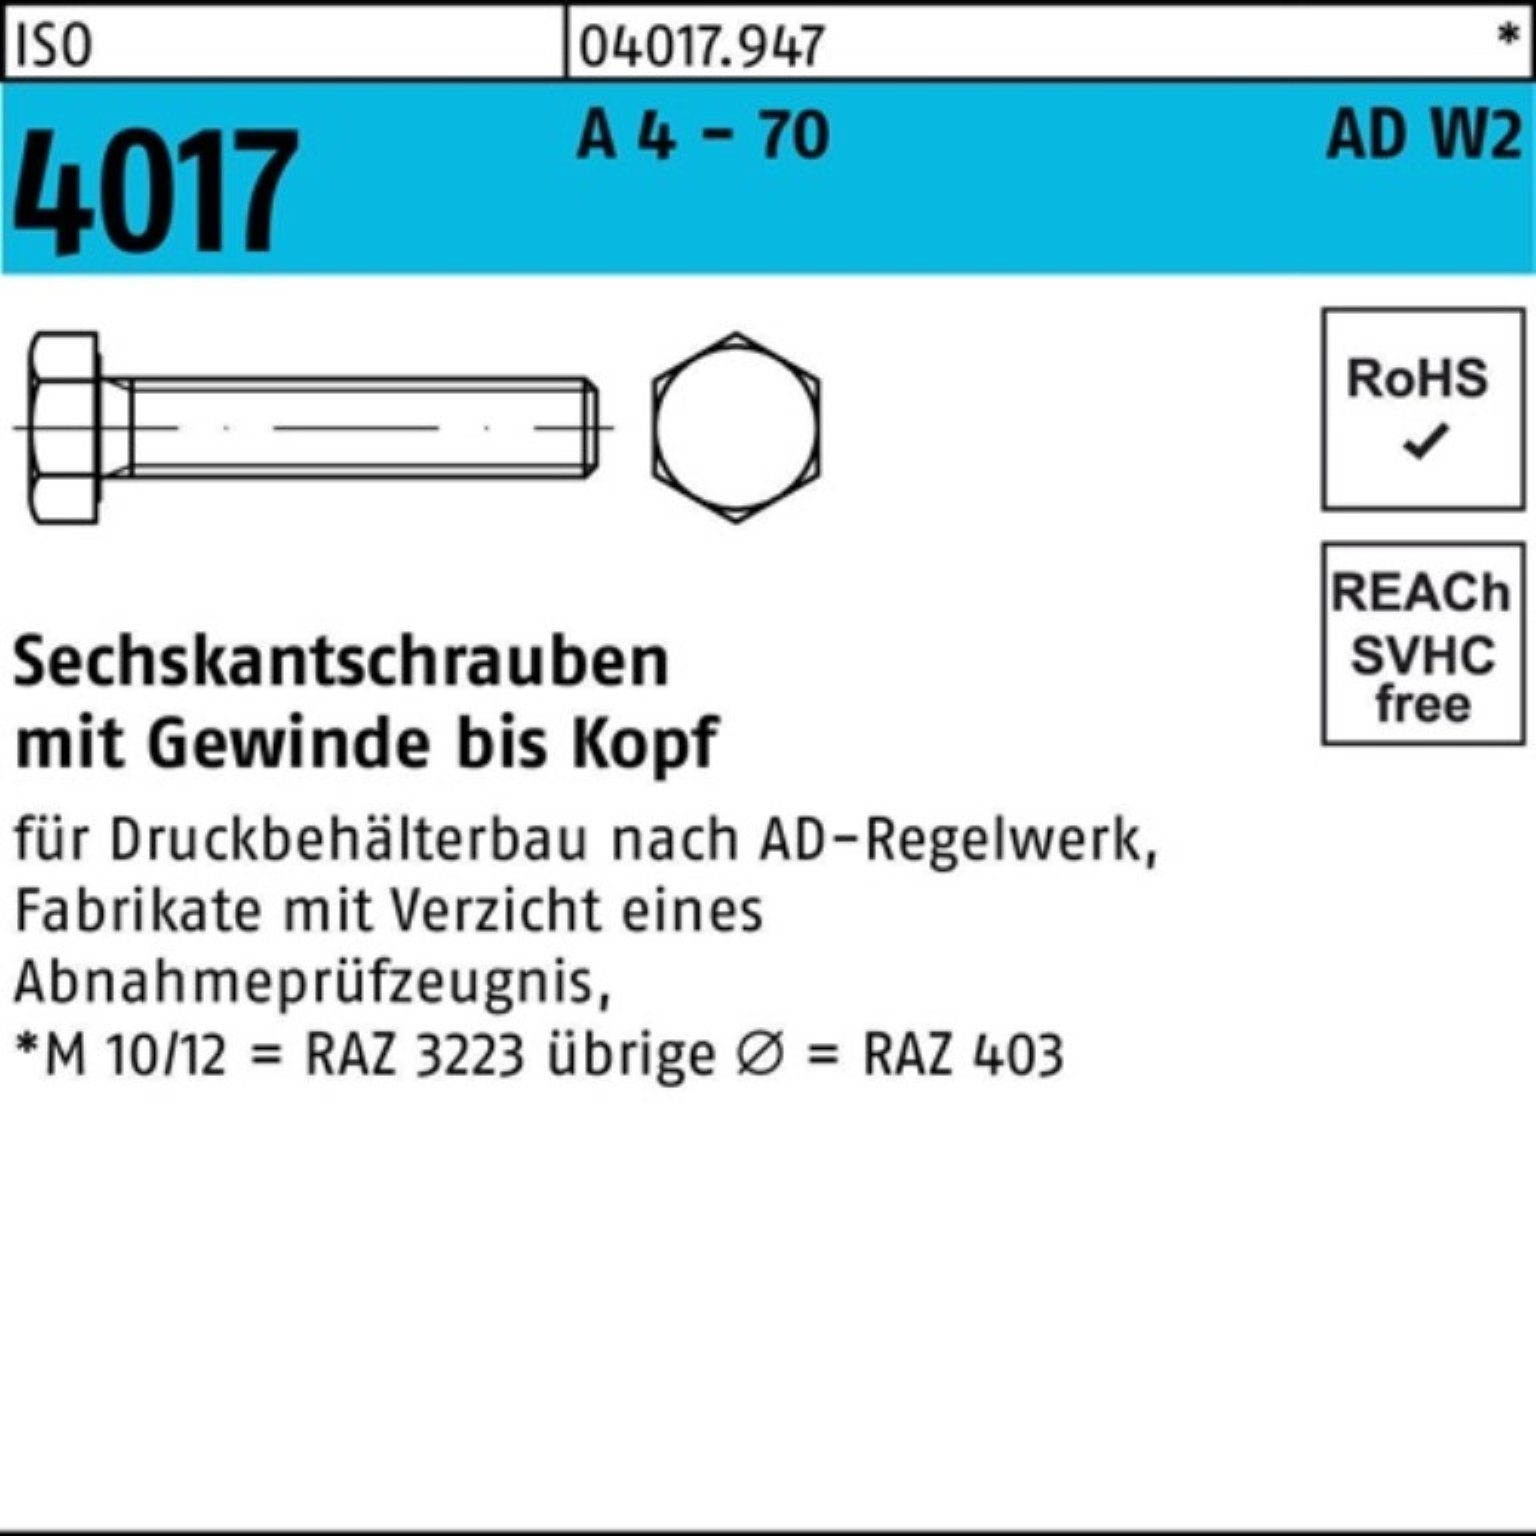 Bufab Sechskantschraube 200er Pack Sechskantschraube ISO 4017 VG M6x 20 A 4 - 70 AD-W2 200 St